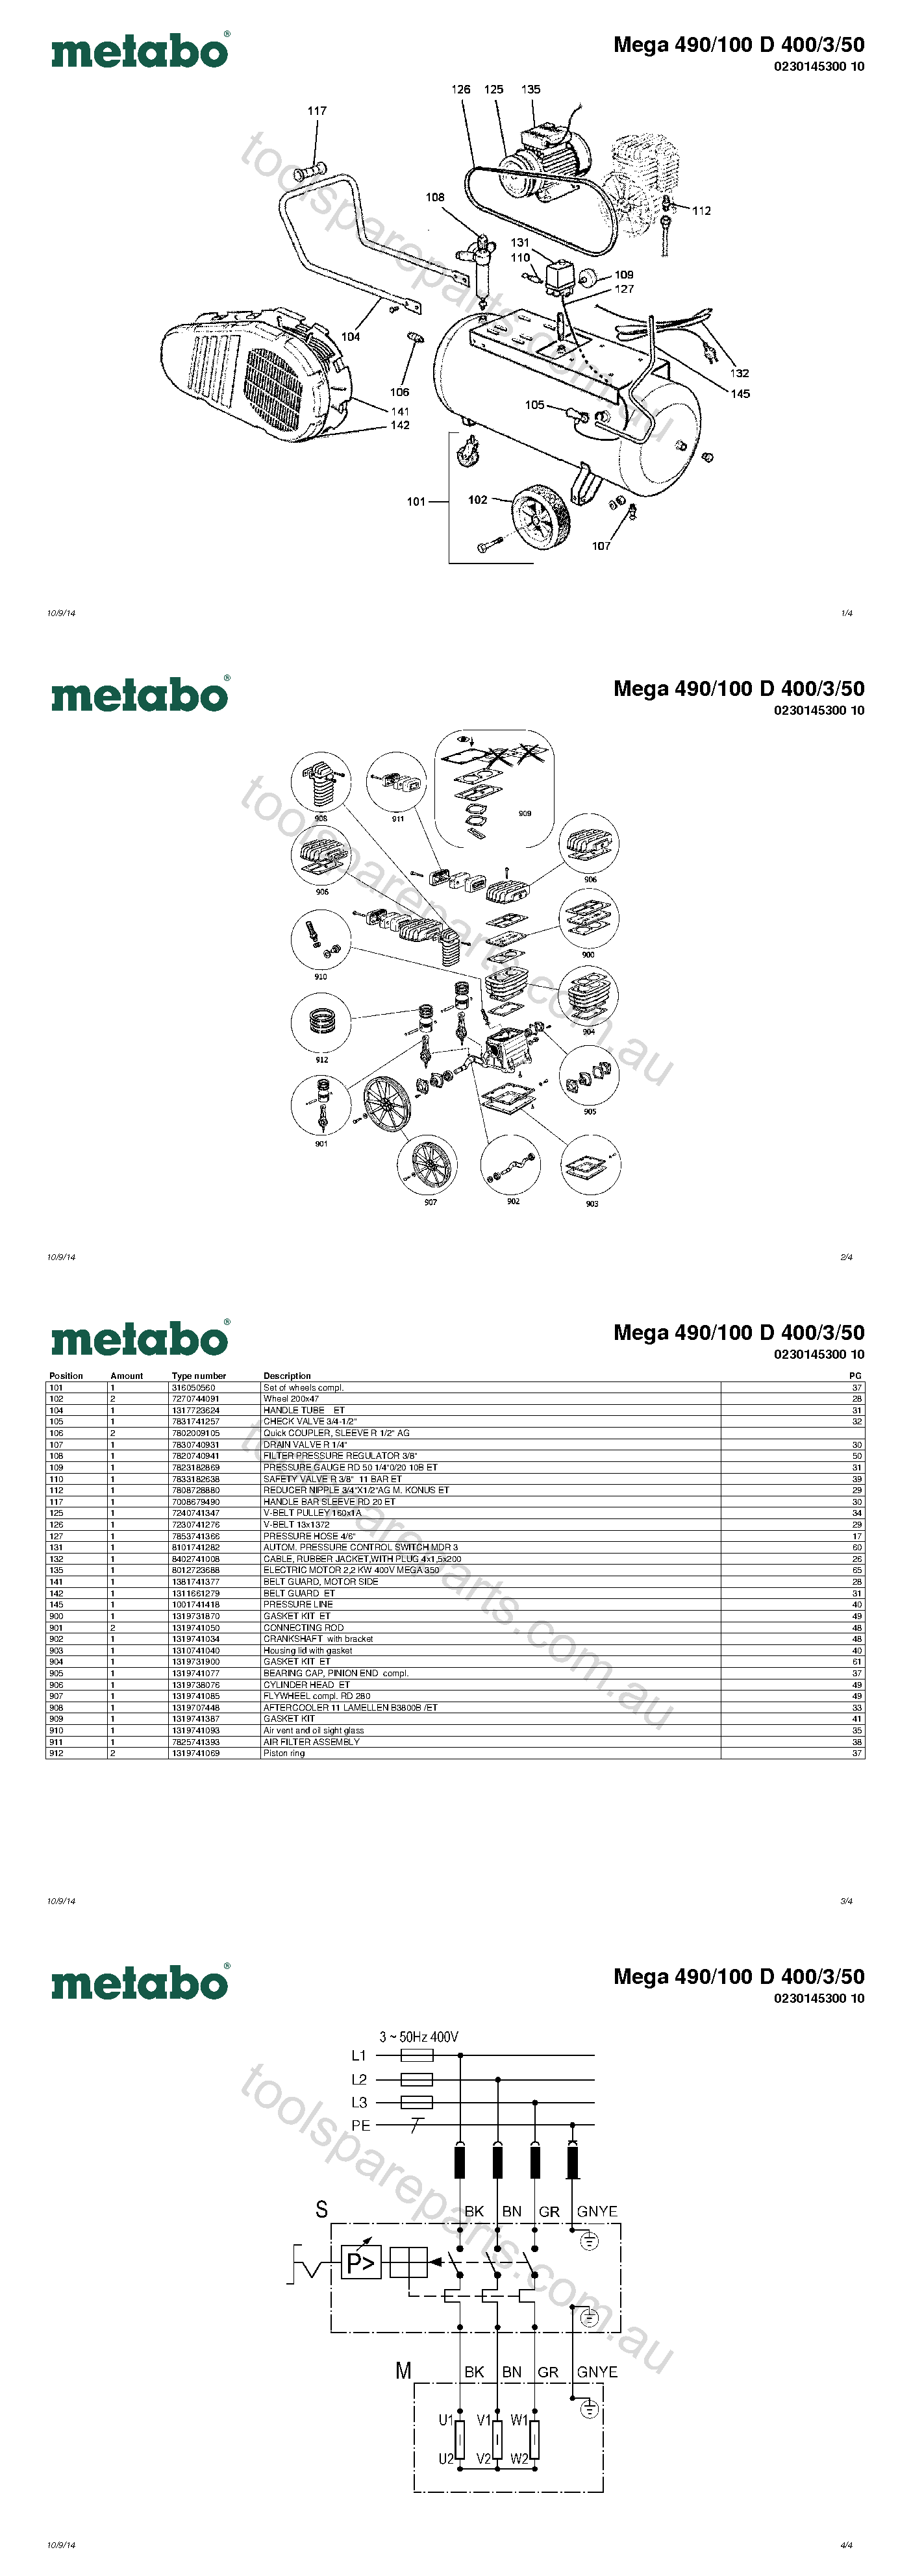 Metabo Mega 490/100 D 400/3/50 0230145300 10  Diagram 1